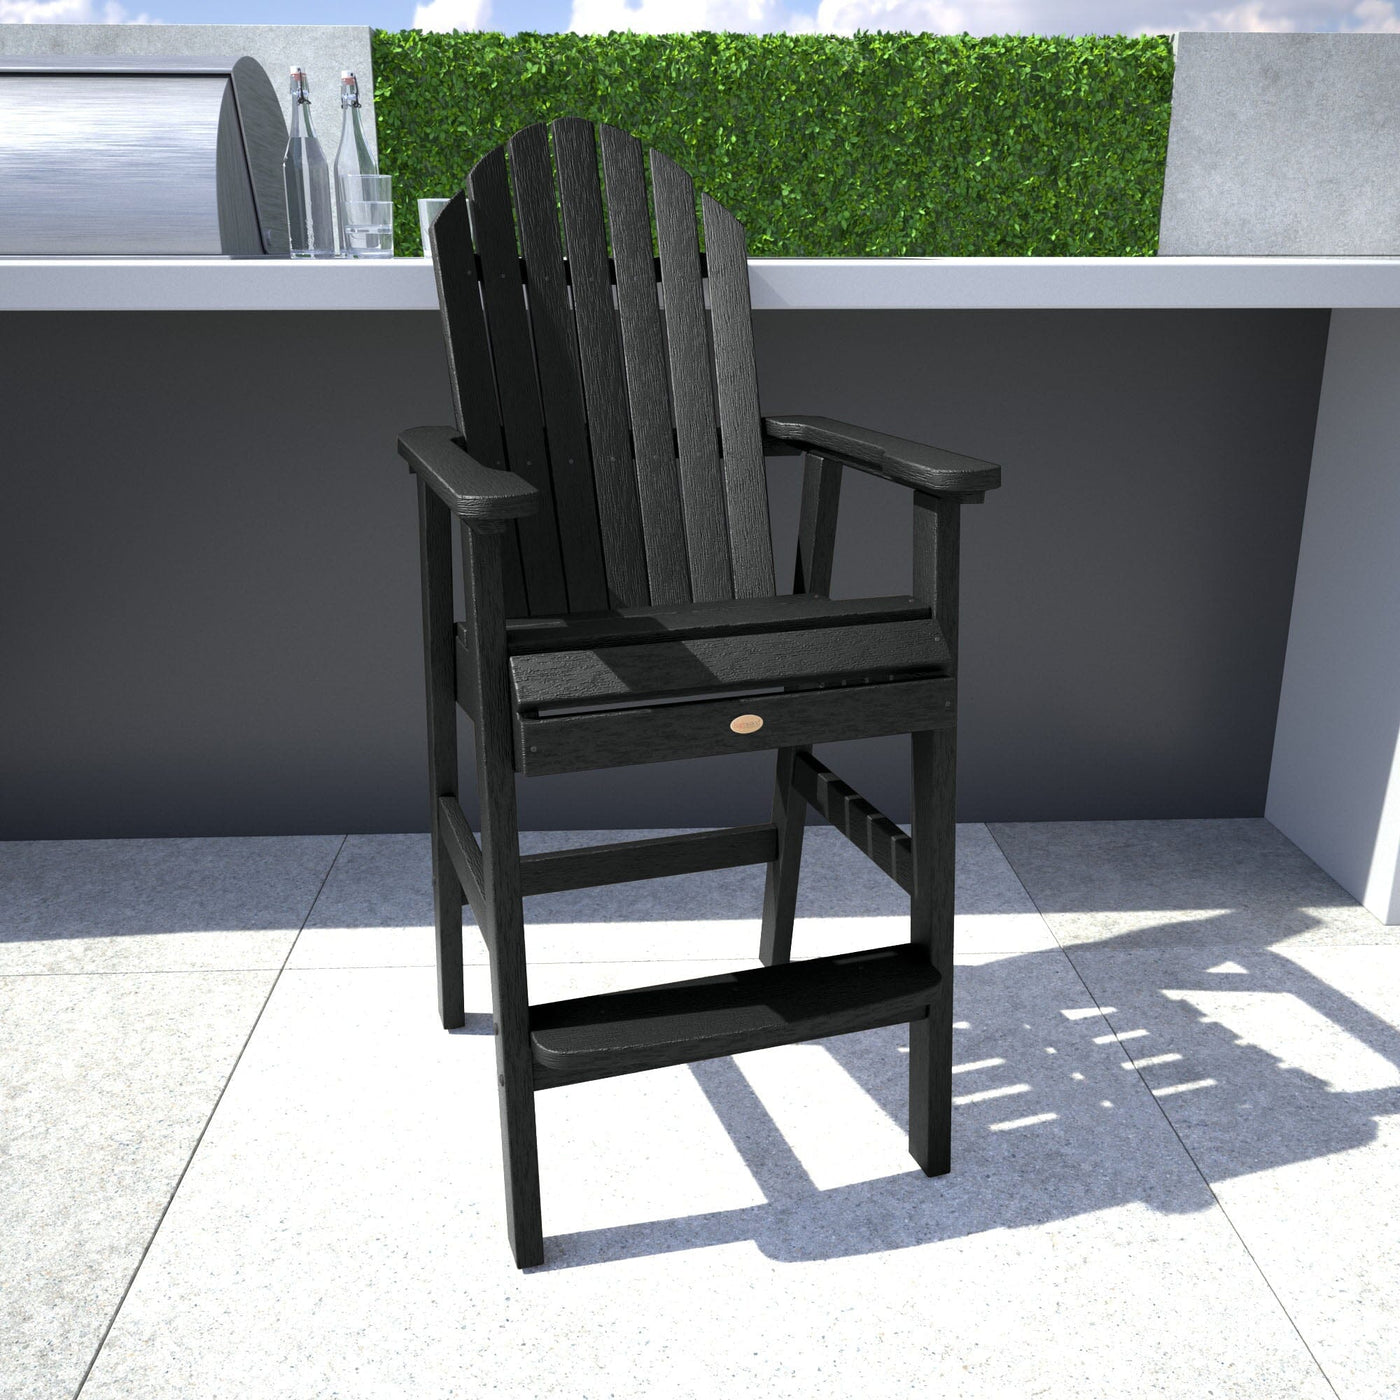 Black Hamilton Bar Height Chair in outdoor kitchen